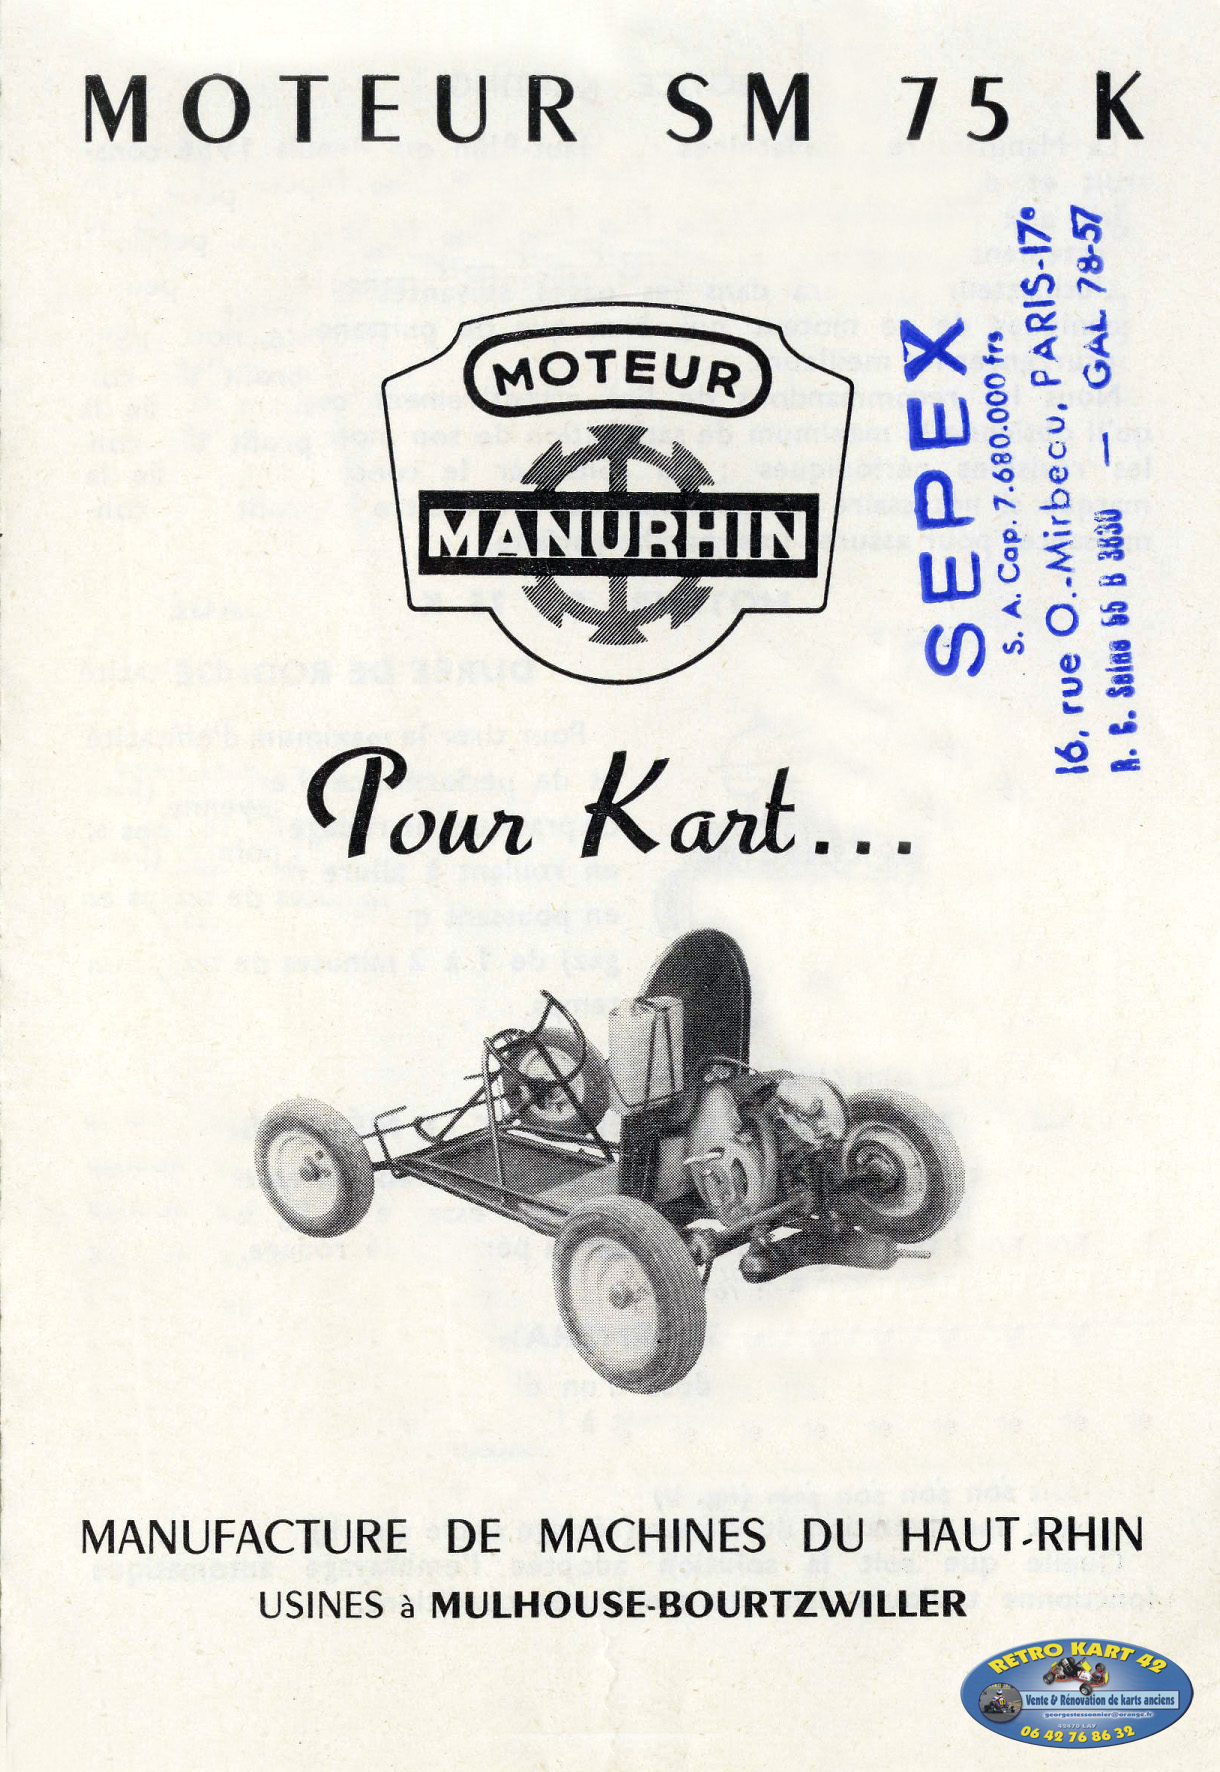 Moteur; Manurhin; Manufacture de Machines du Haut-Rhin; Mulhouse; Sepex; Bourtzwiller